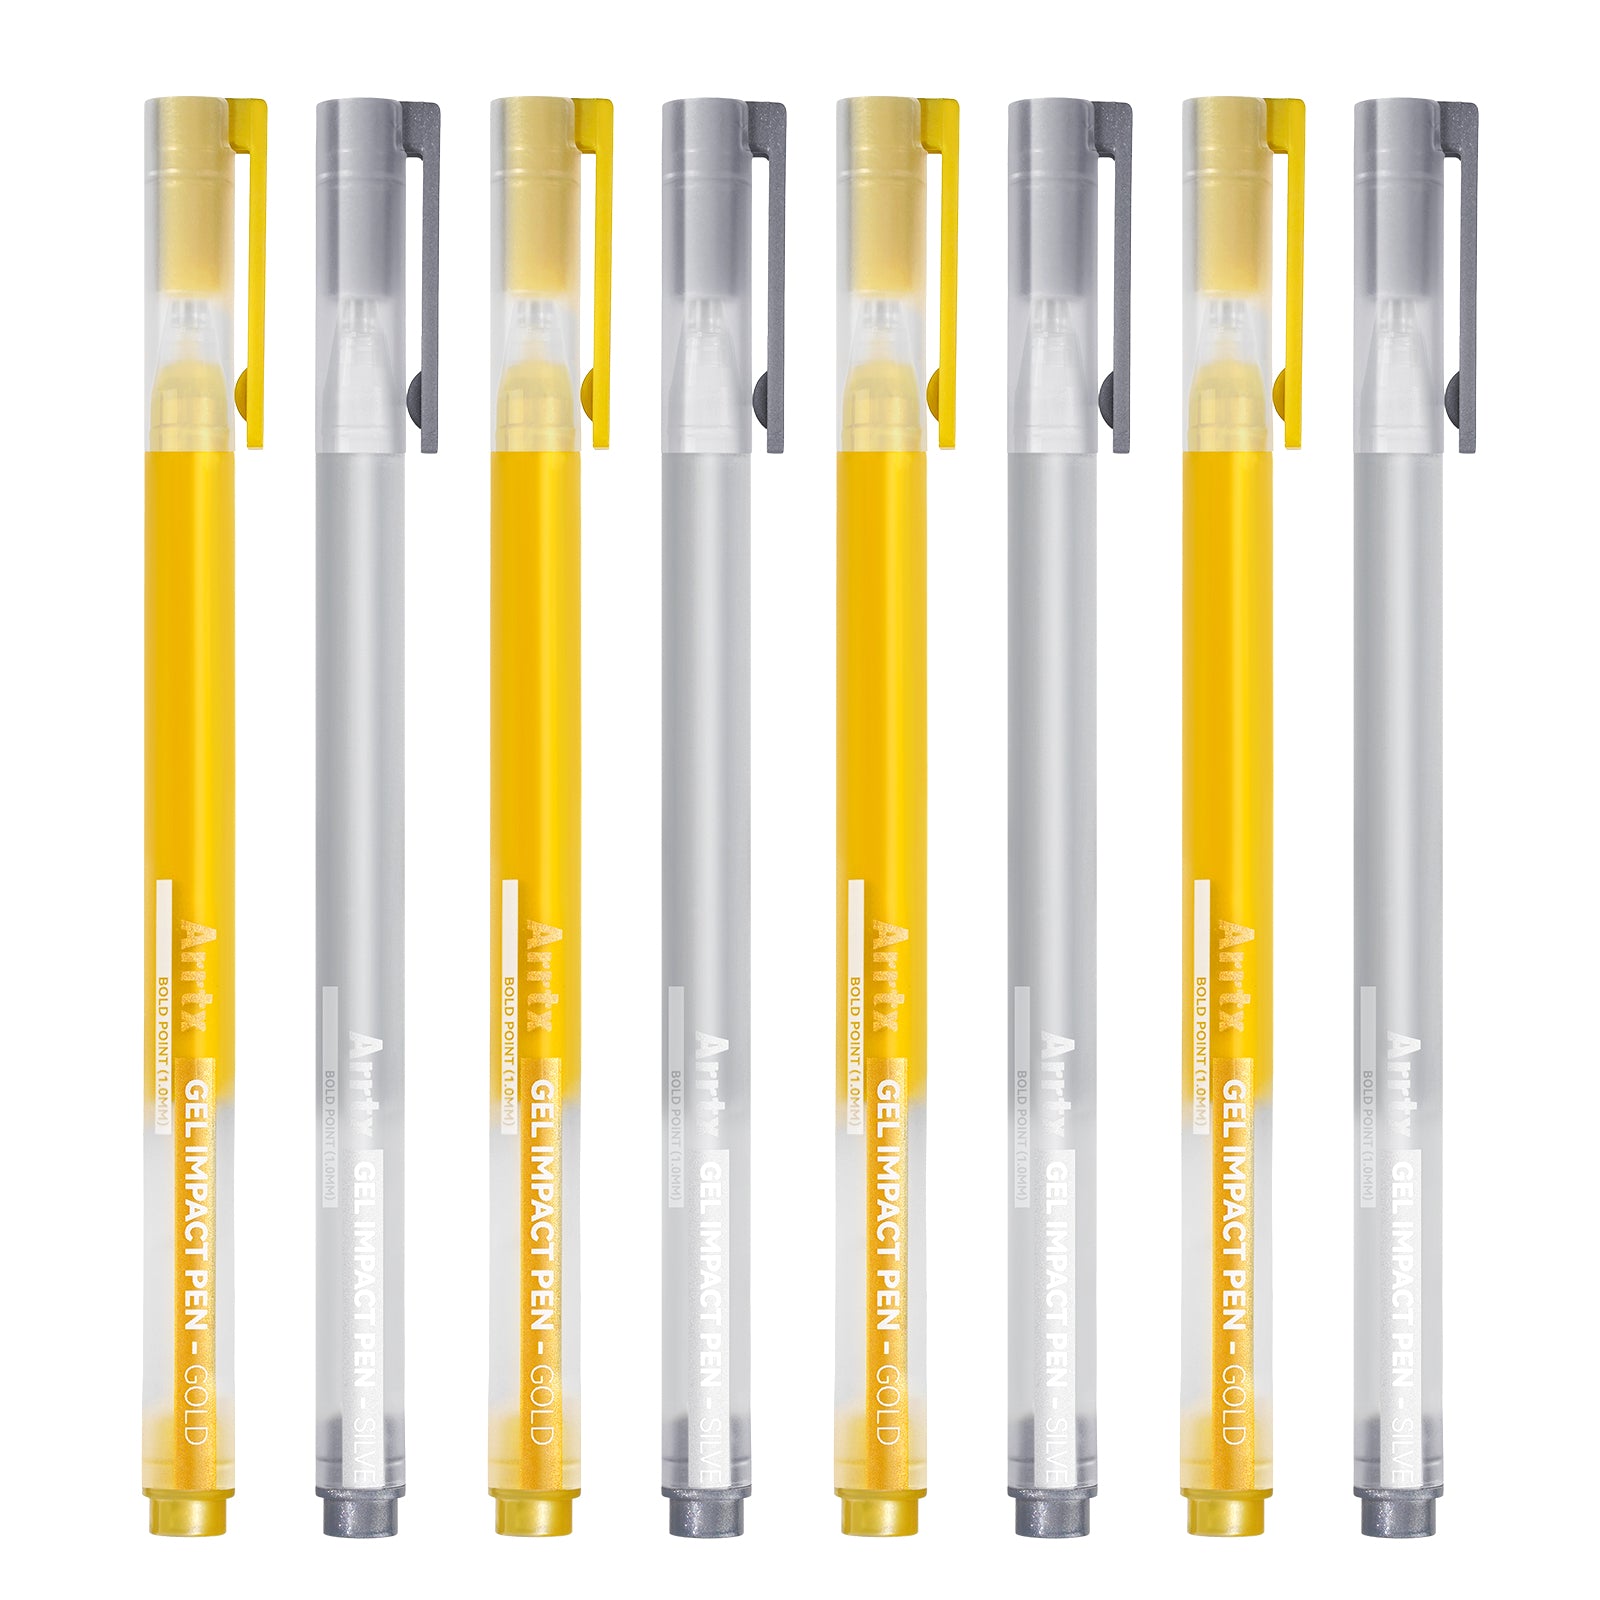 Arrtx Gel Pens Gold & Silver Color 8 Pack Large Capacity White Ink Pens